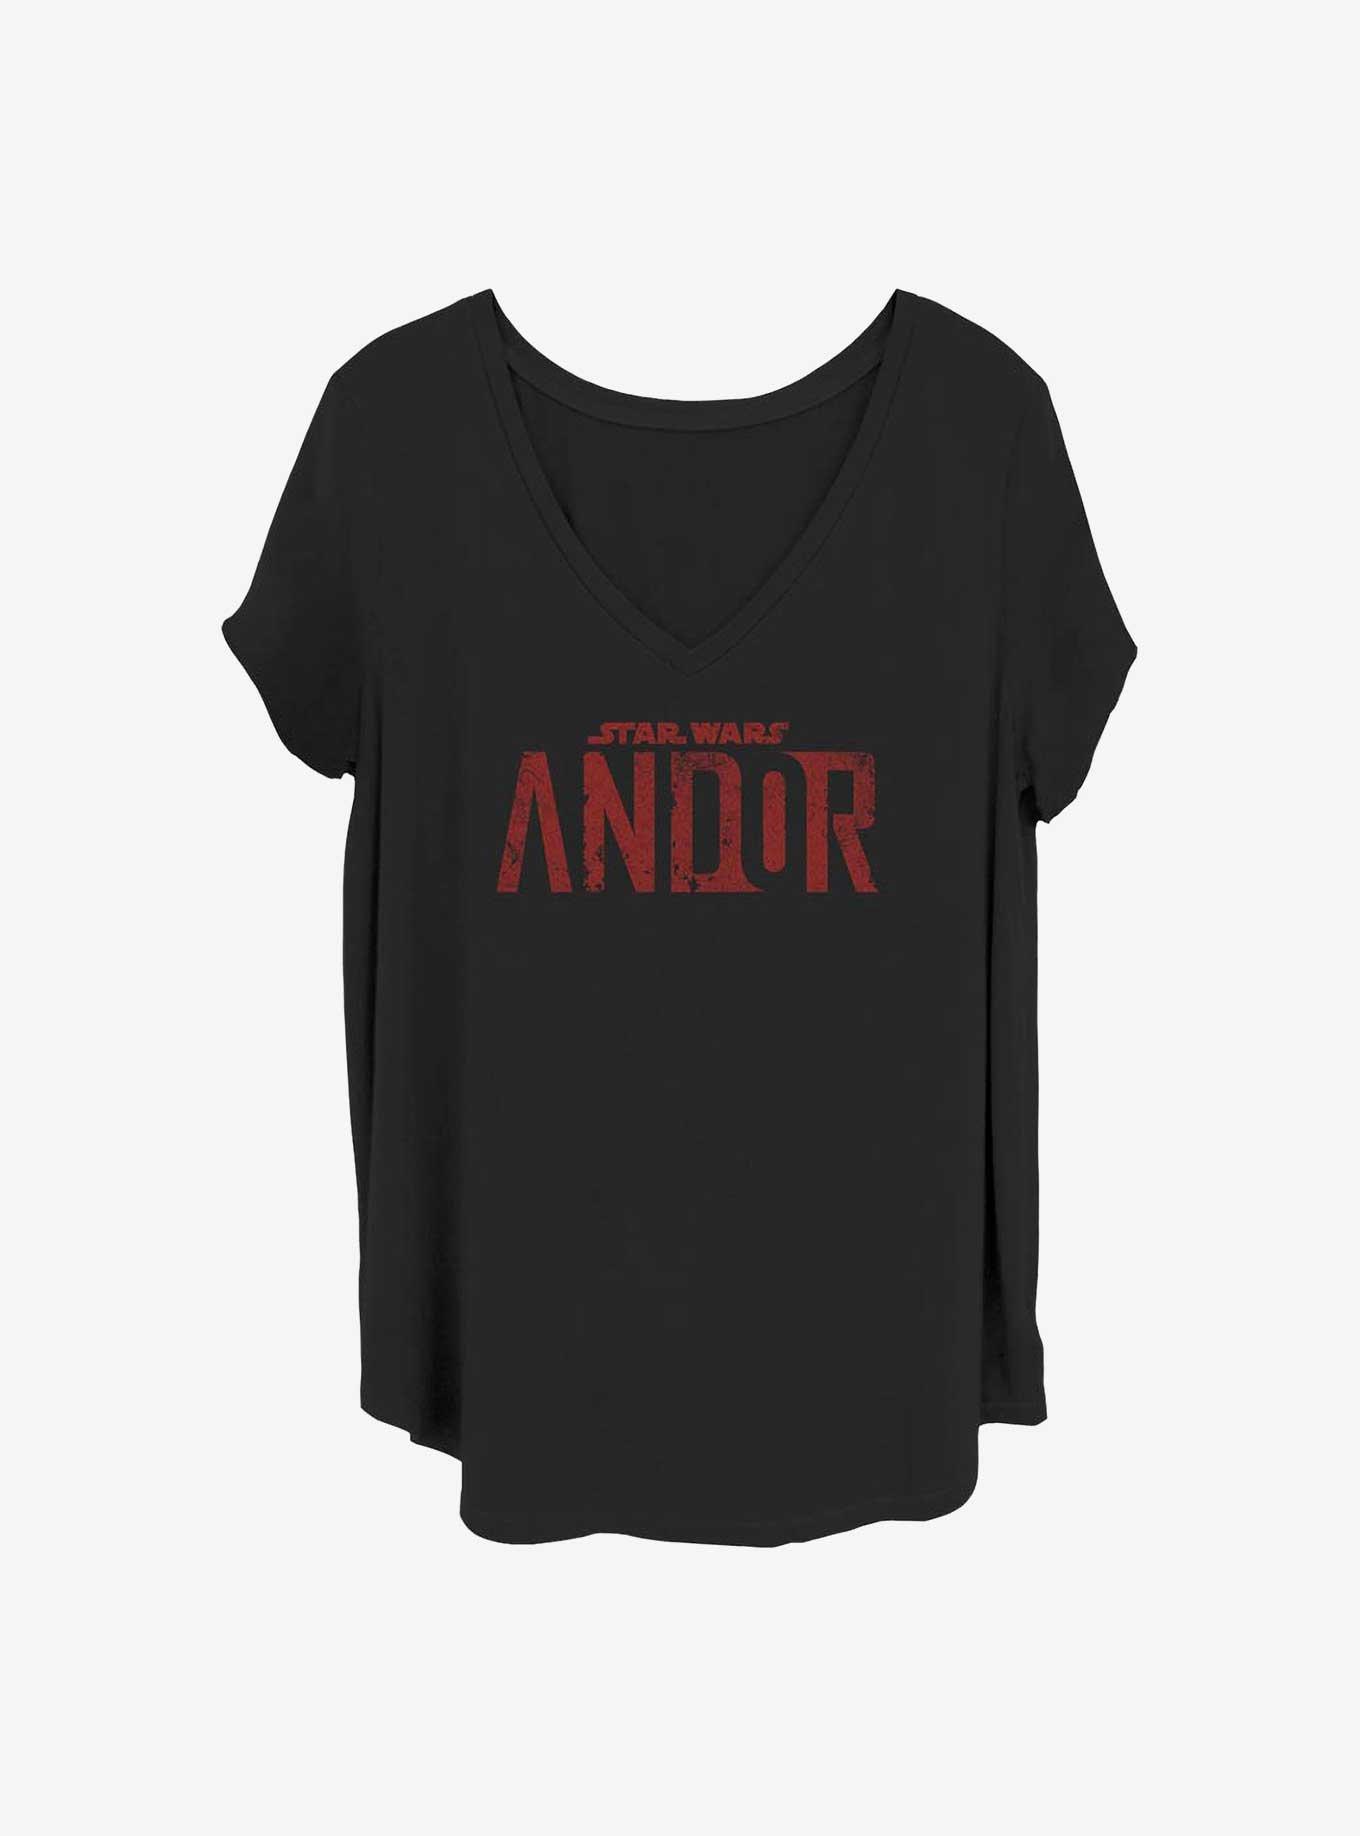 Star Wars Andor Logo Girls T-Shirt Plus